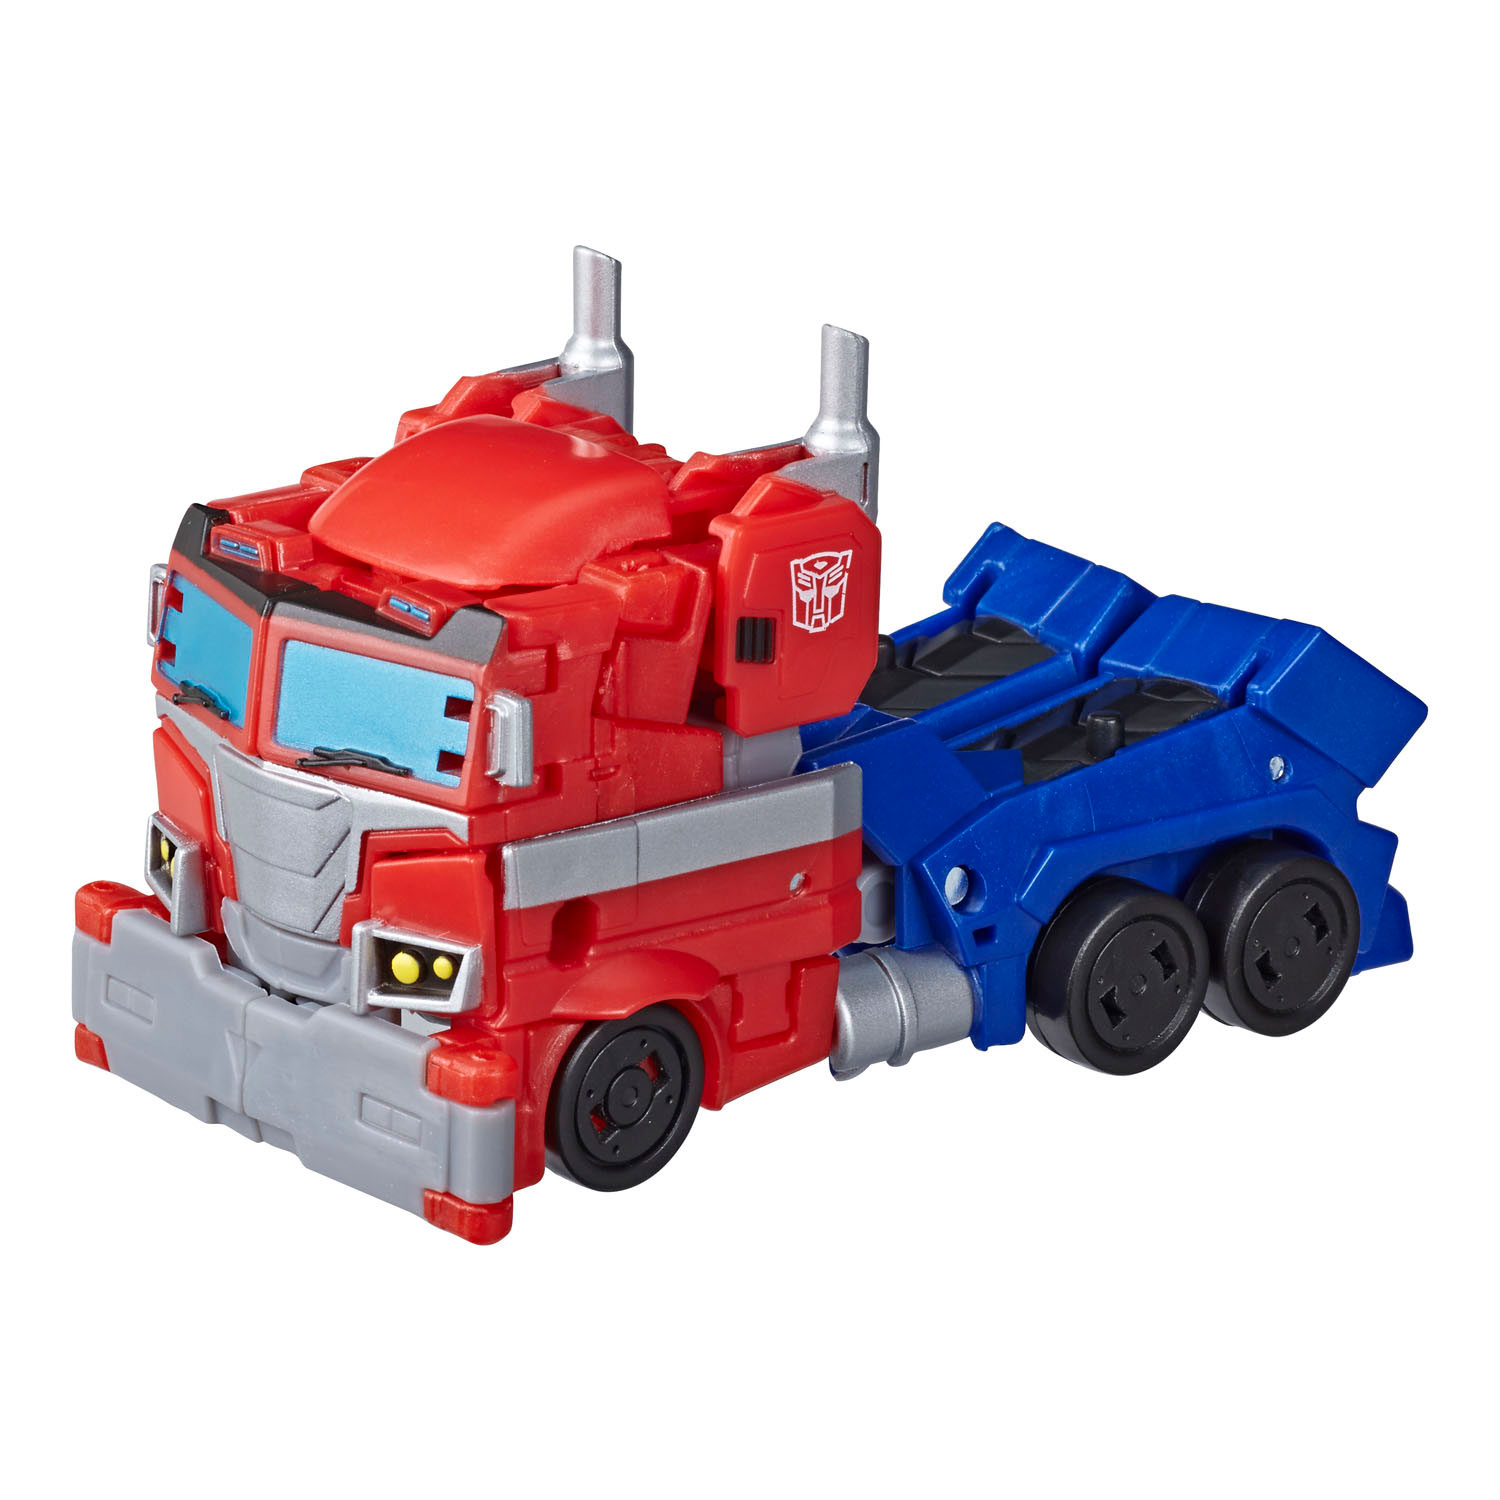 Transformers Cyberverse Deluxe - Optimus Prime